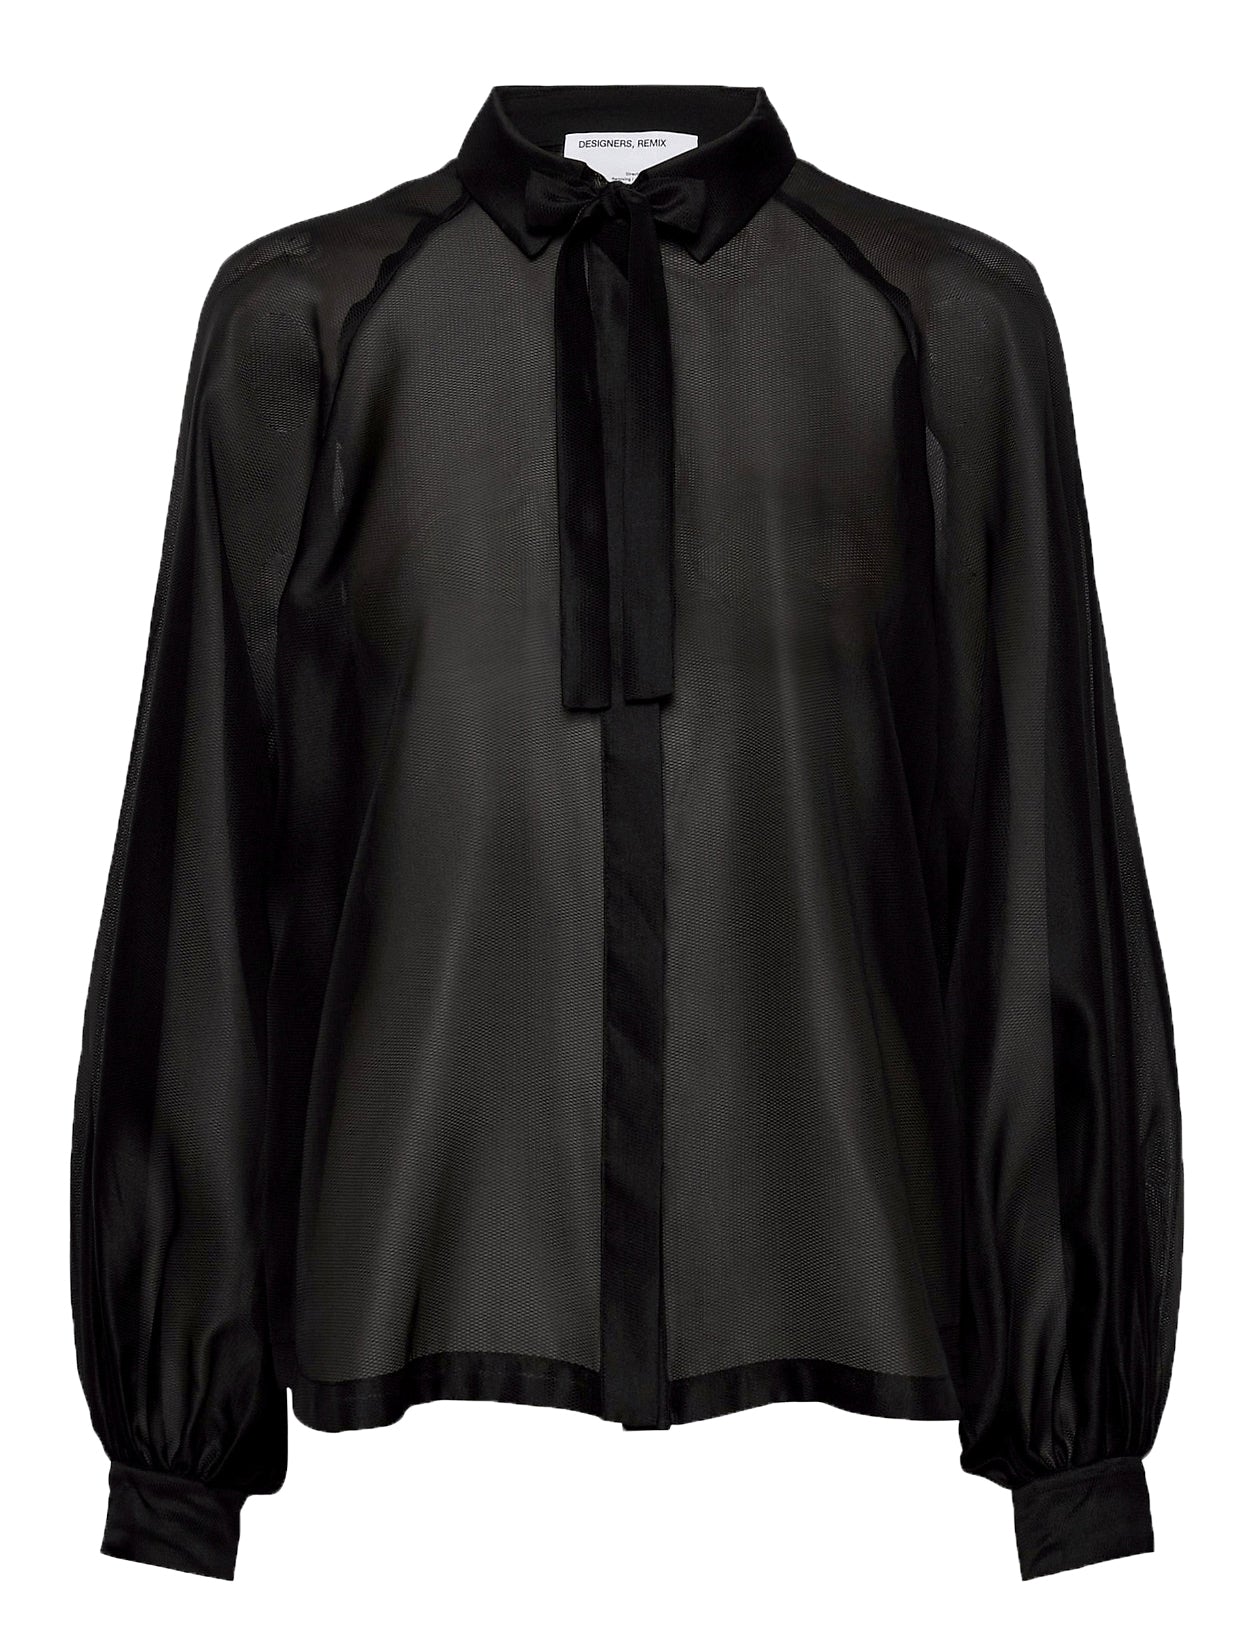 Enola Sleeve Shirt - Black - Designers Remix - Bluser & Skjorter - VILLOID.no